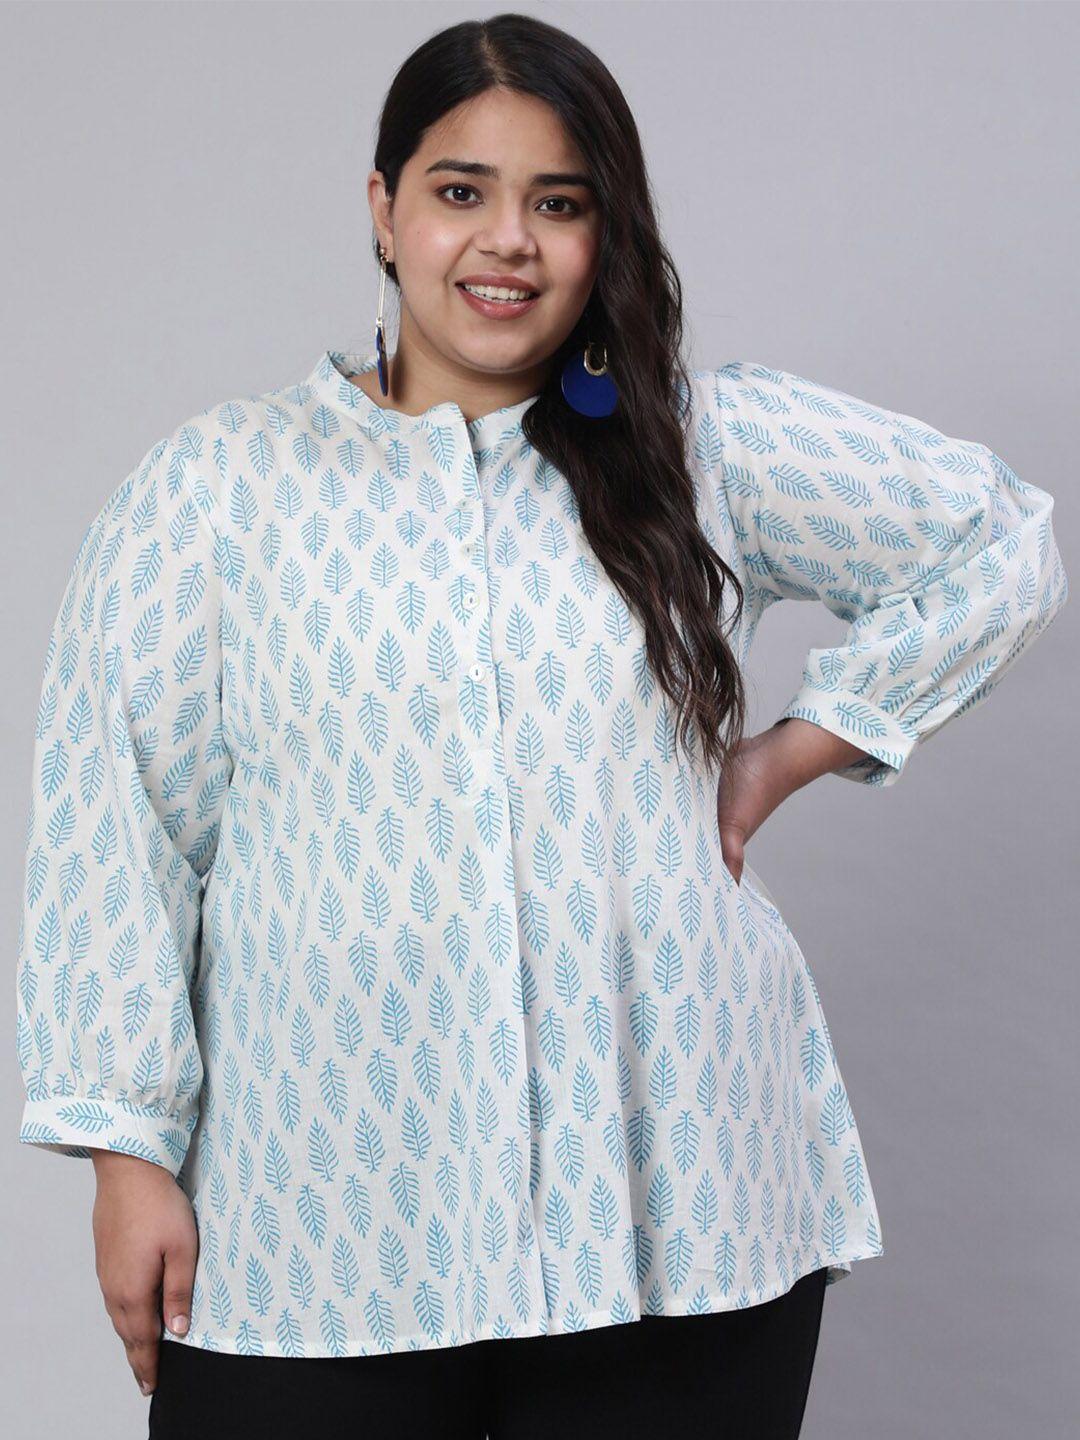 jaipur kurti turquoise blue plus size ethnic motifs printed cotton shirt style top